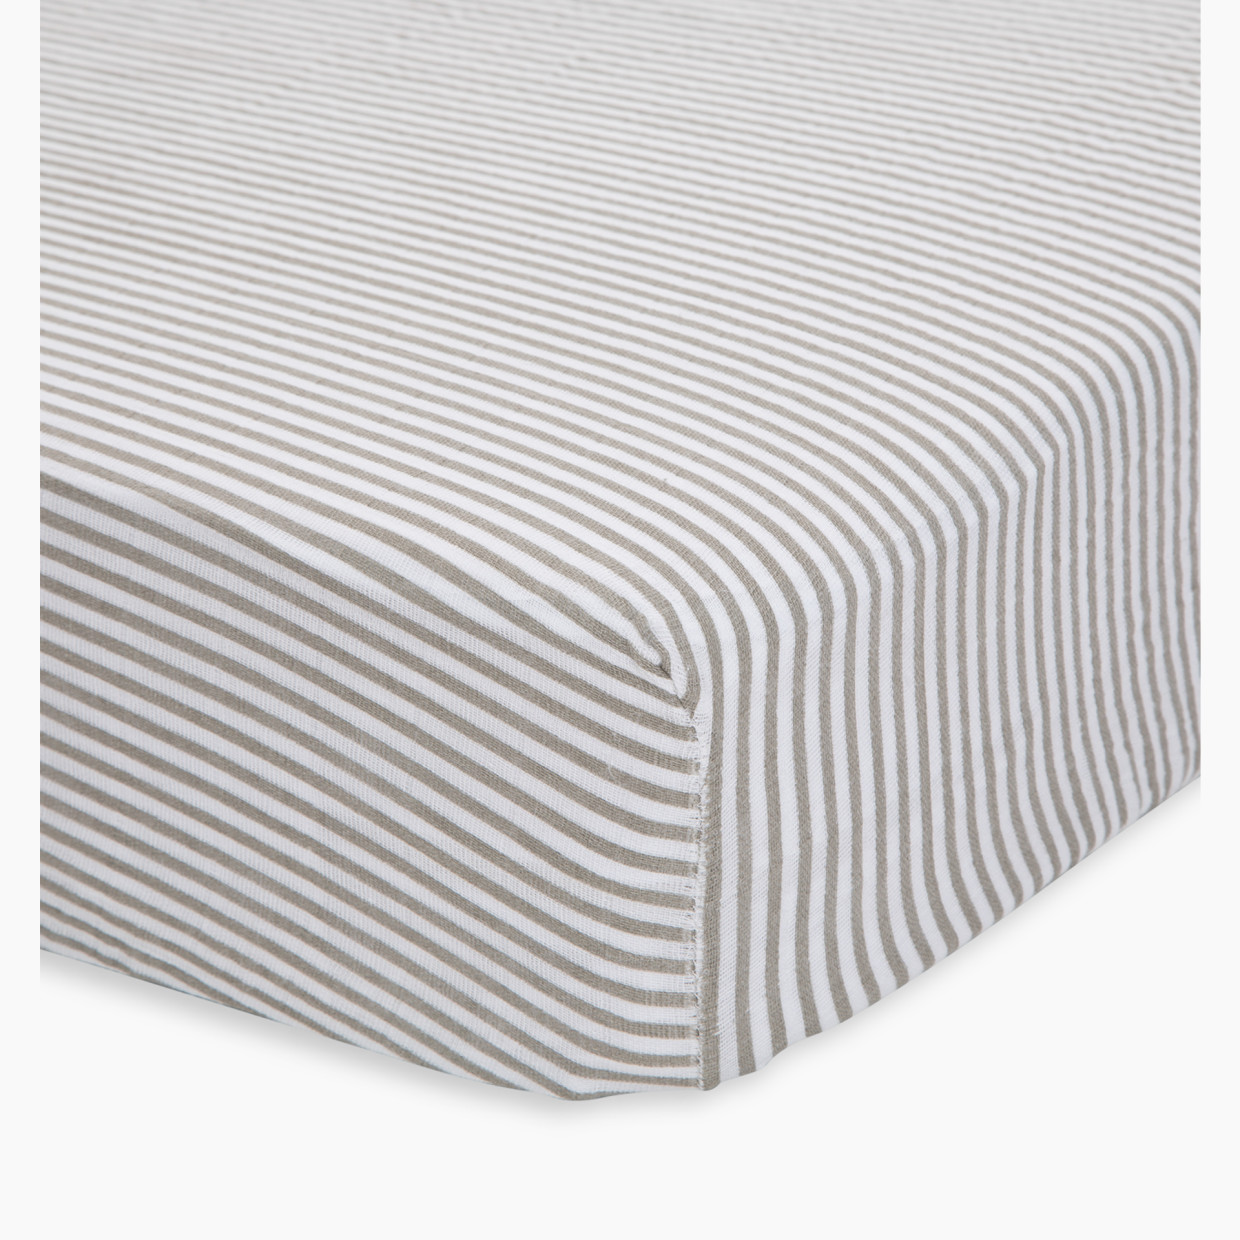 Little Unicorn Cotton Muslin Crib Sheet - Grey Stripe.